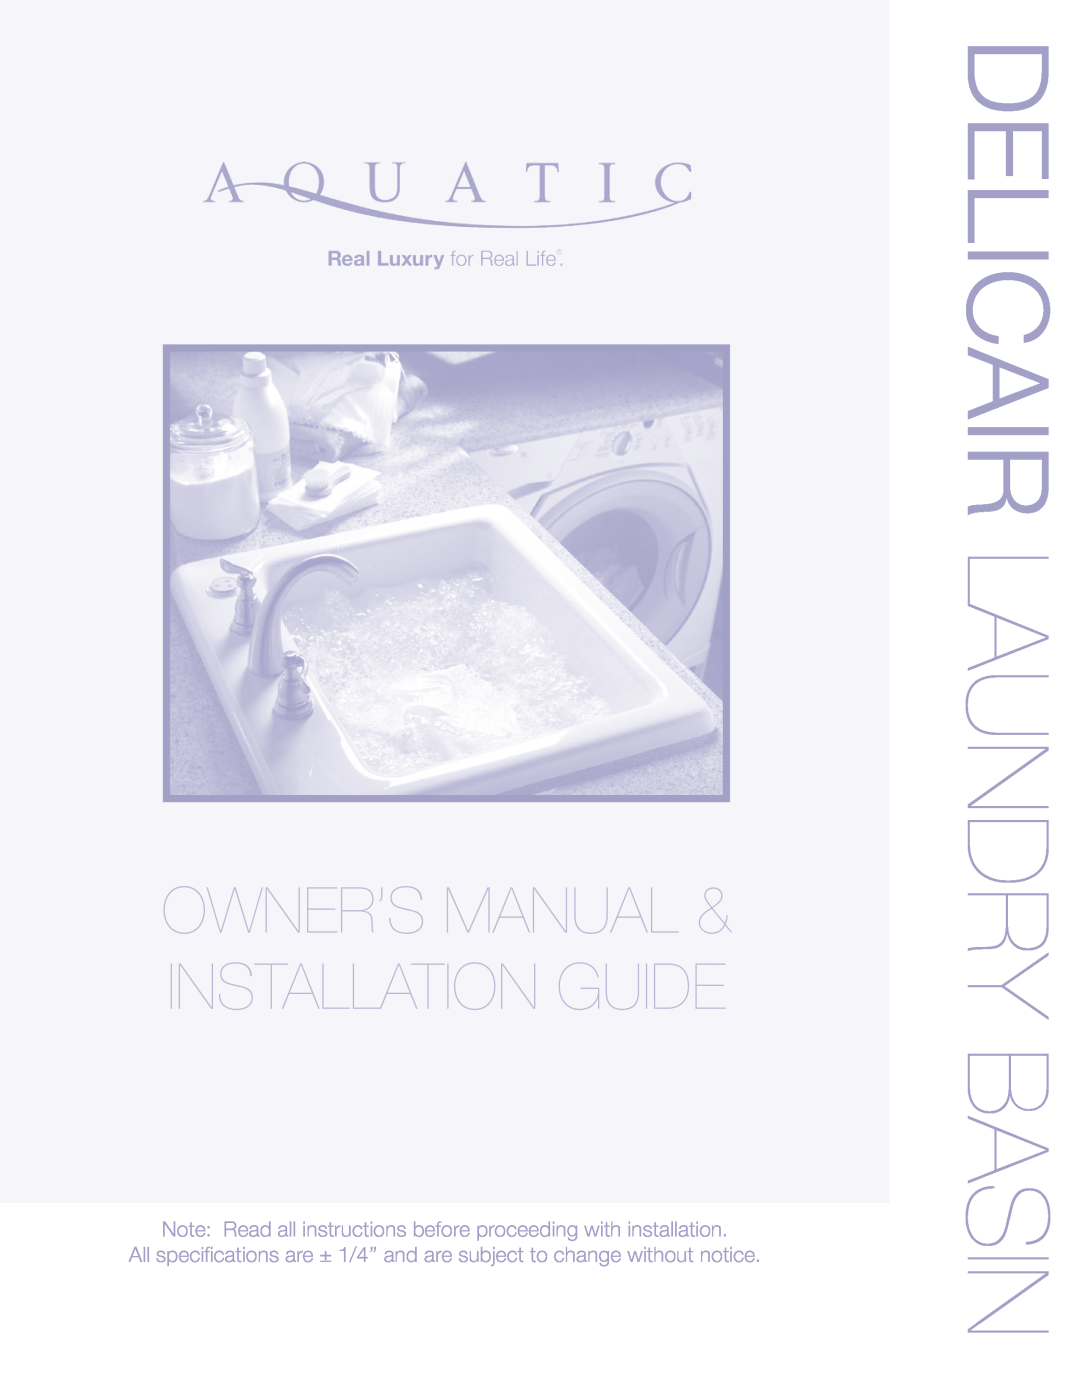 Aquatic Delicair Laundry Basin owner manual AS Y BDELICAIR lAUNDR 